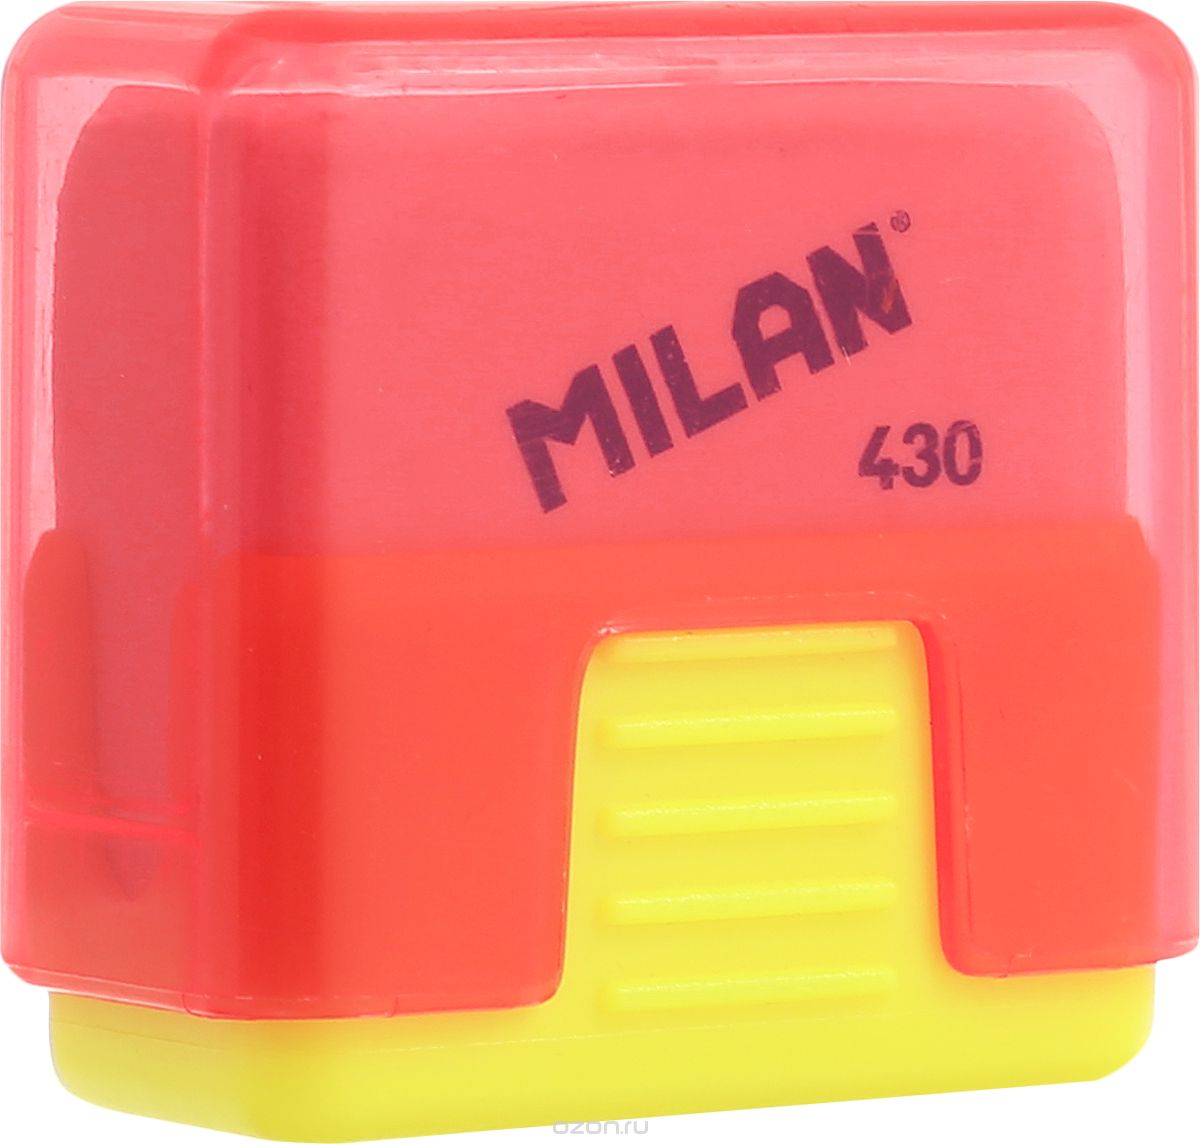  Milan School 430,   